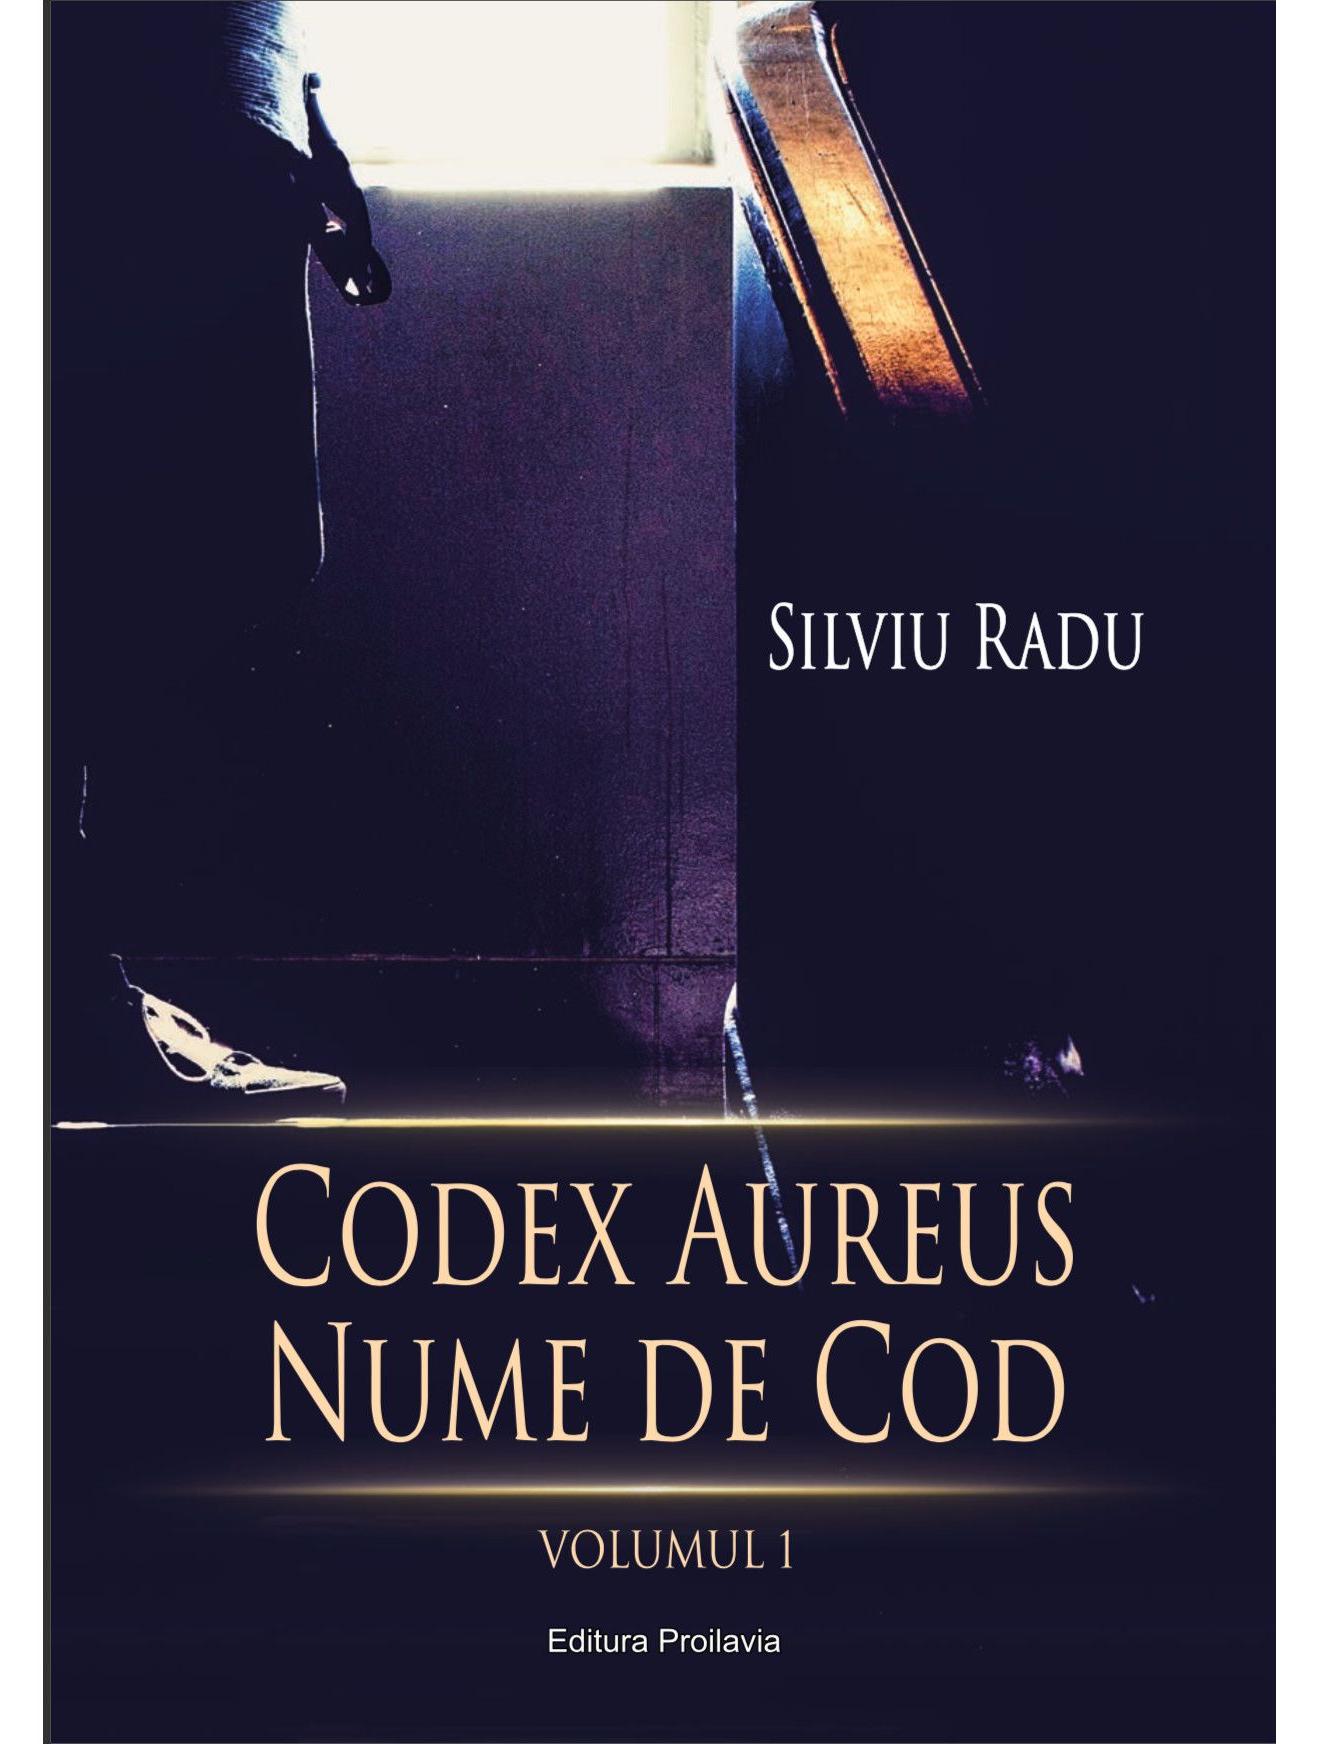 Codex Aureus, nume de cod Vol. 1 - Silviu Radu